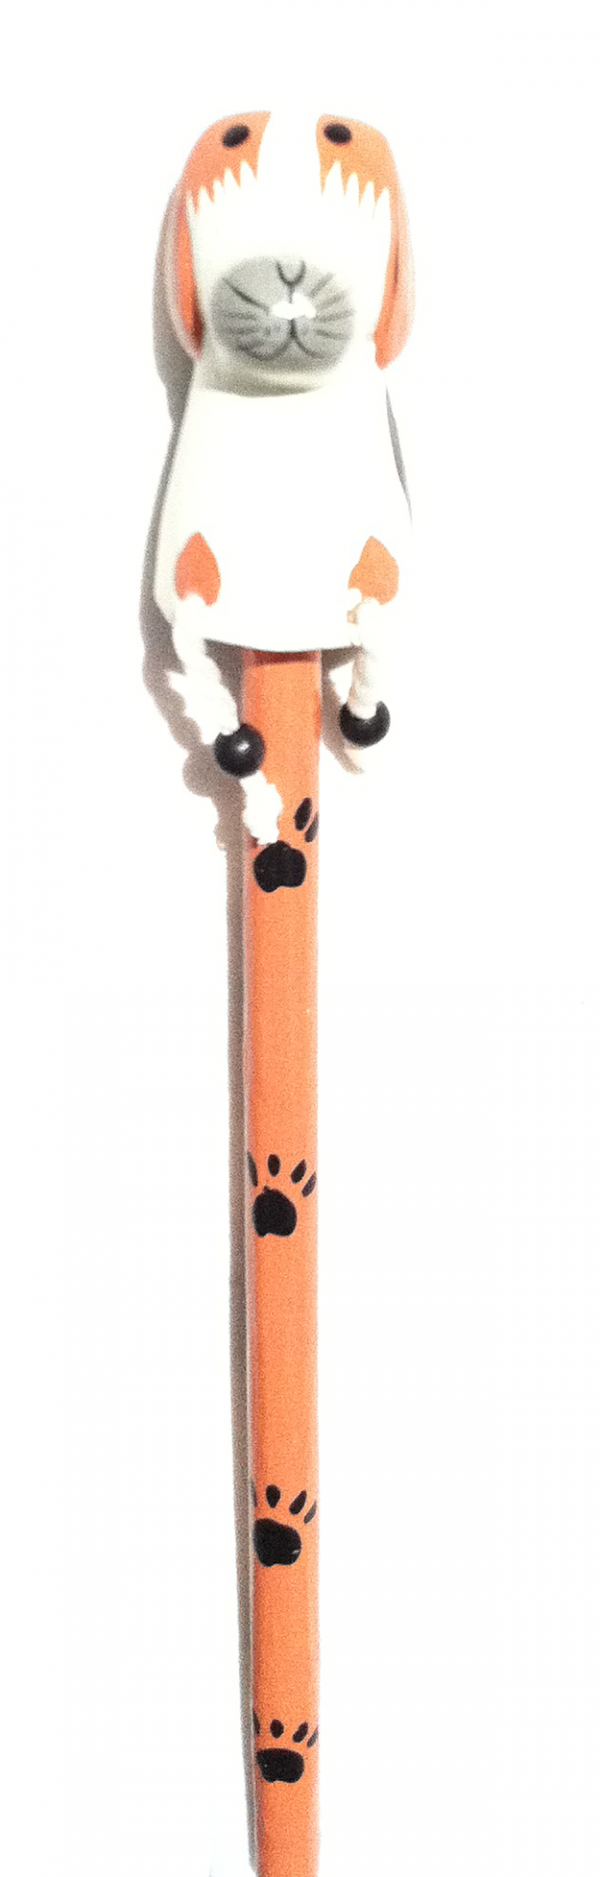 Handcrafted wooden dog pencil - orange